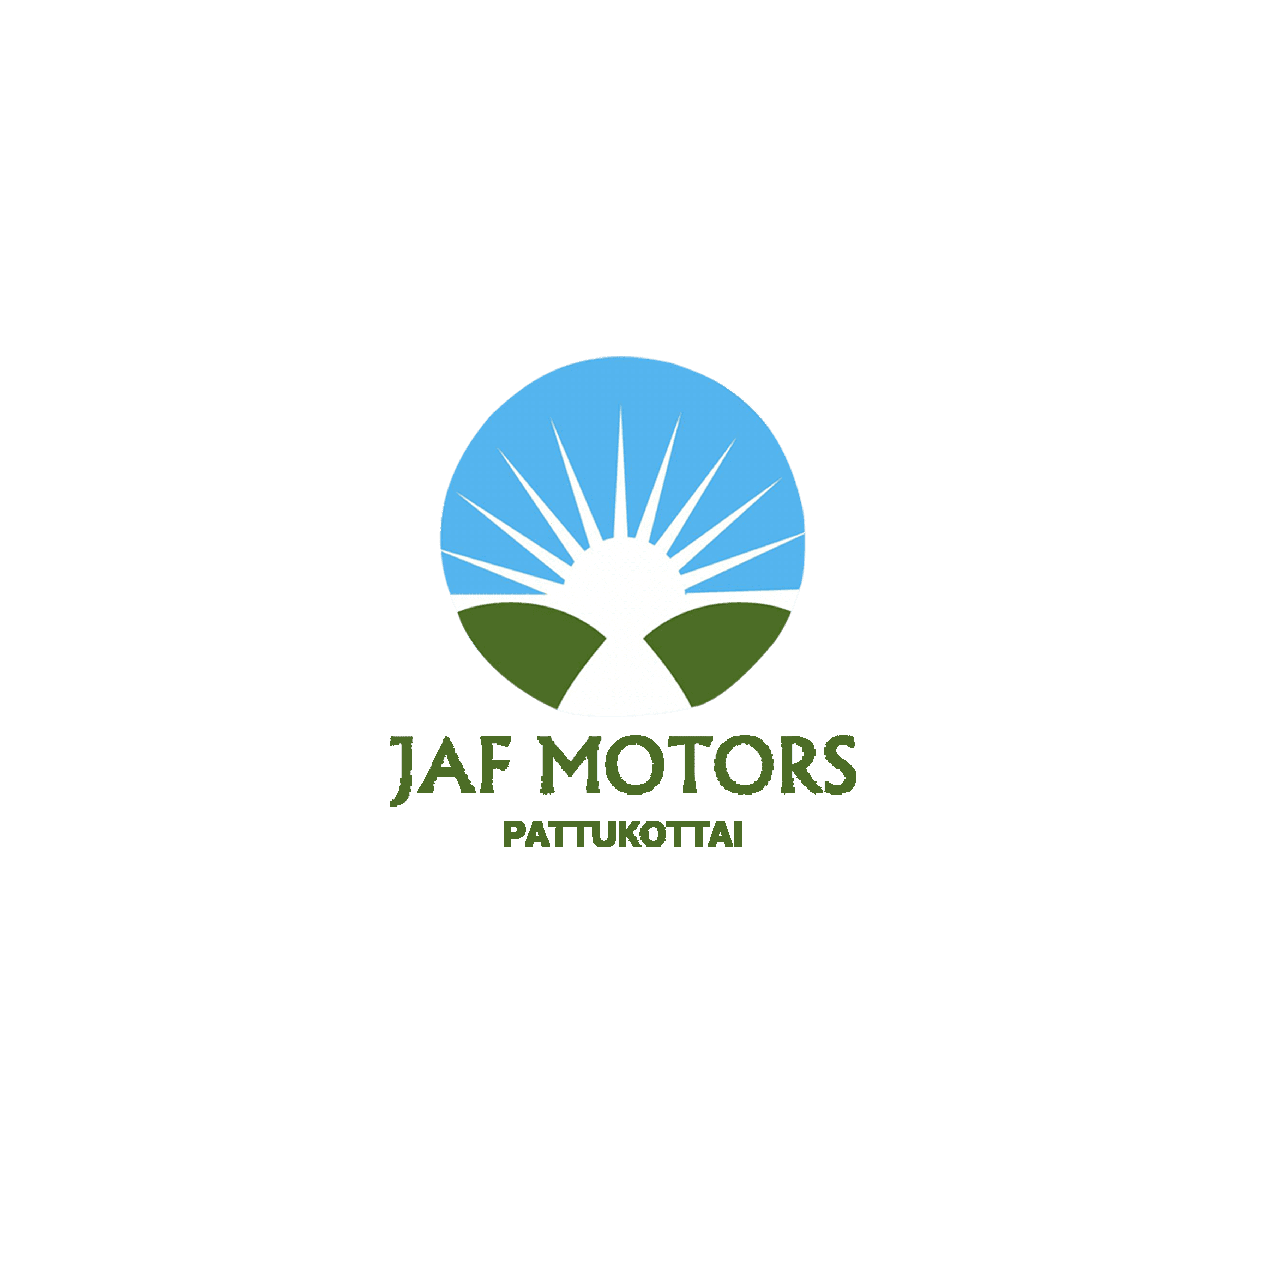 Jaff motors